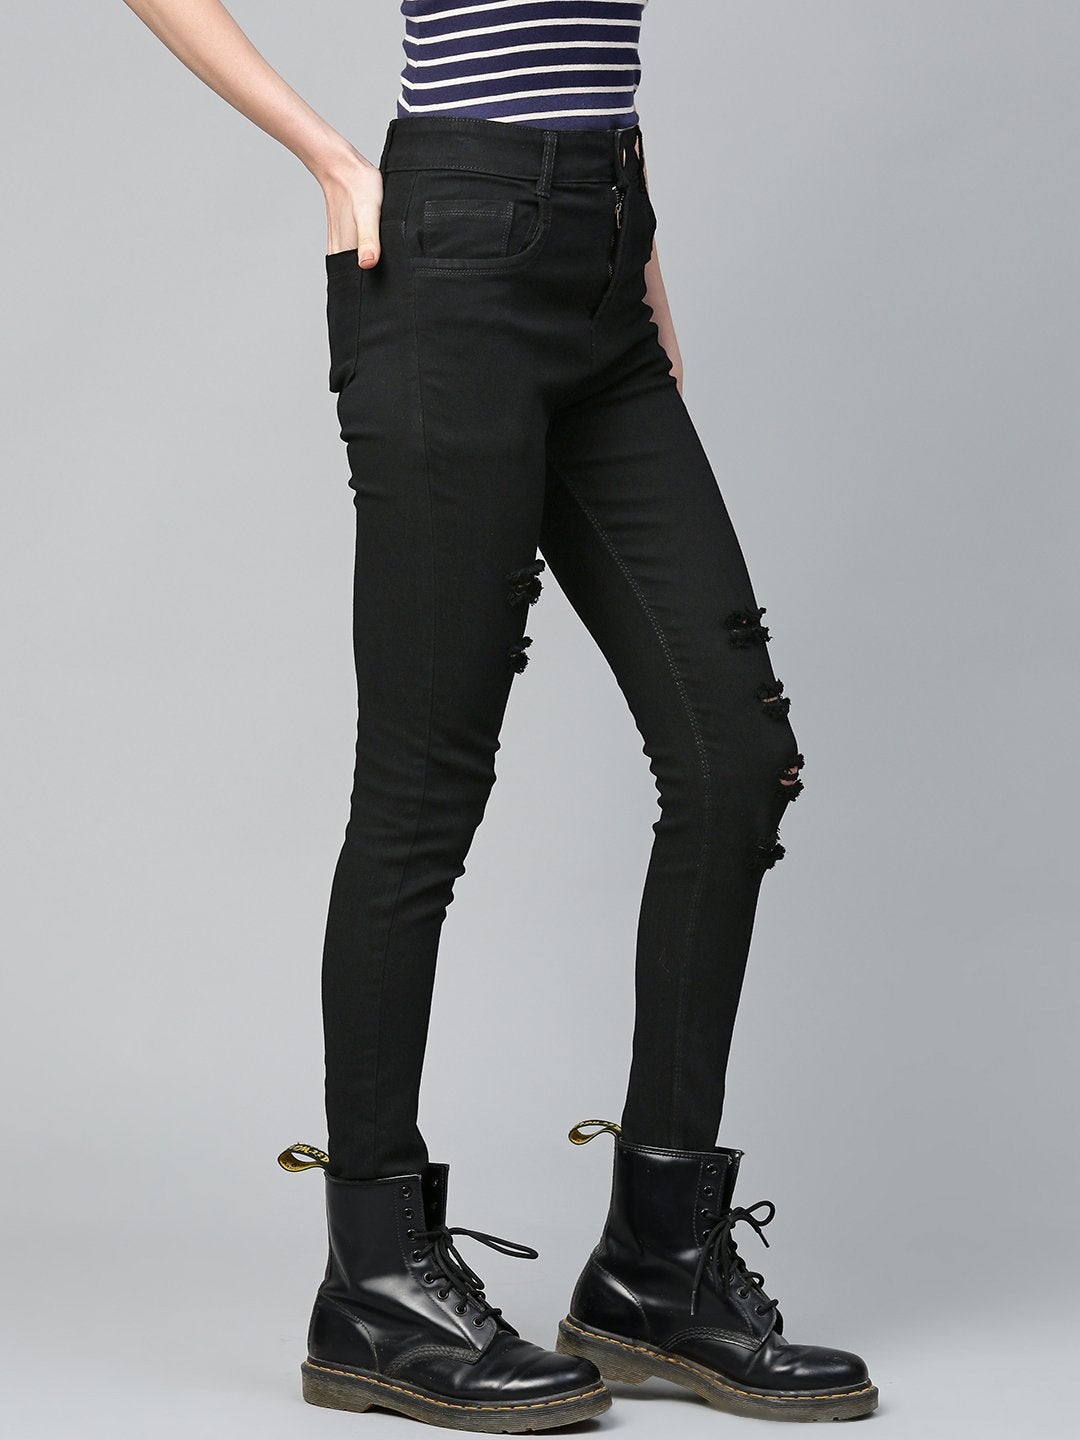 Women's Black Heavy Distressed Multi-Slit Jeans - SASSAFRAS